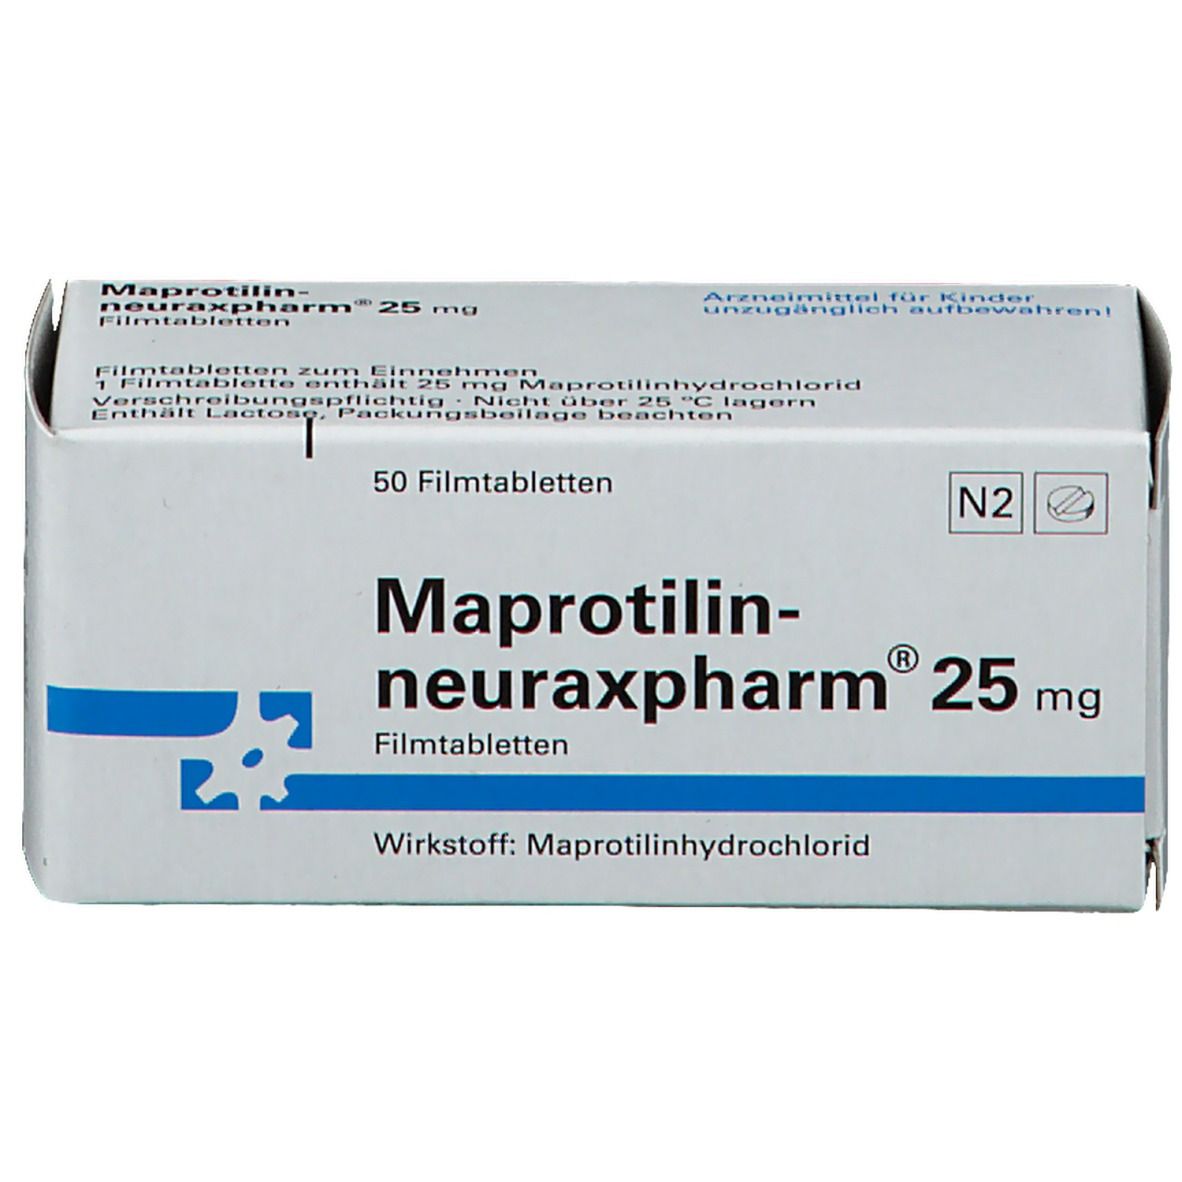 Maprotilin-neuraxpharm® 25 mg